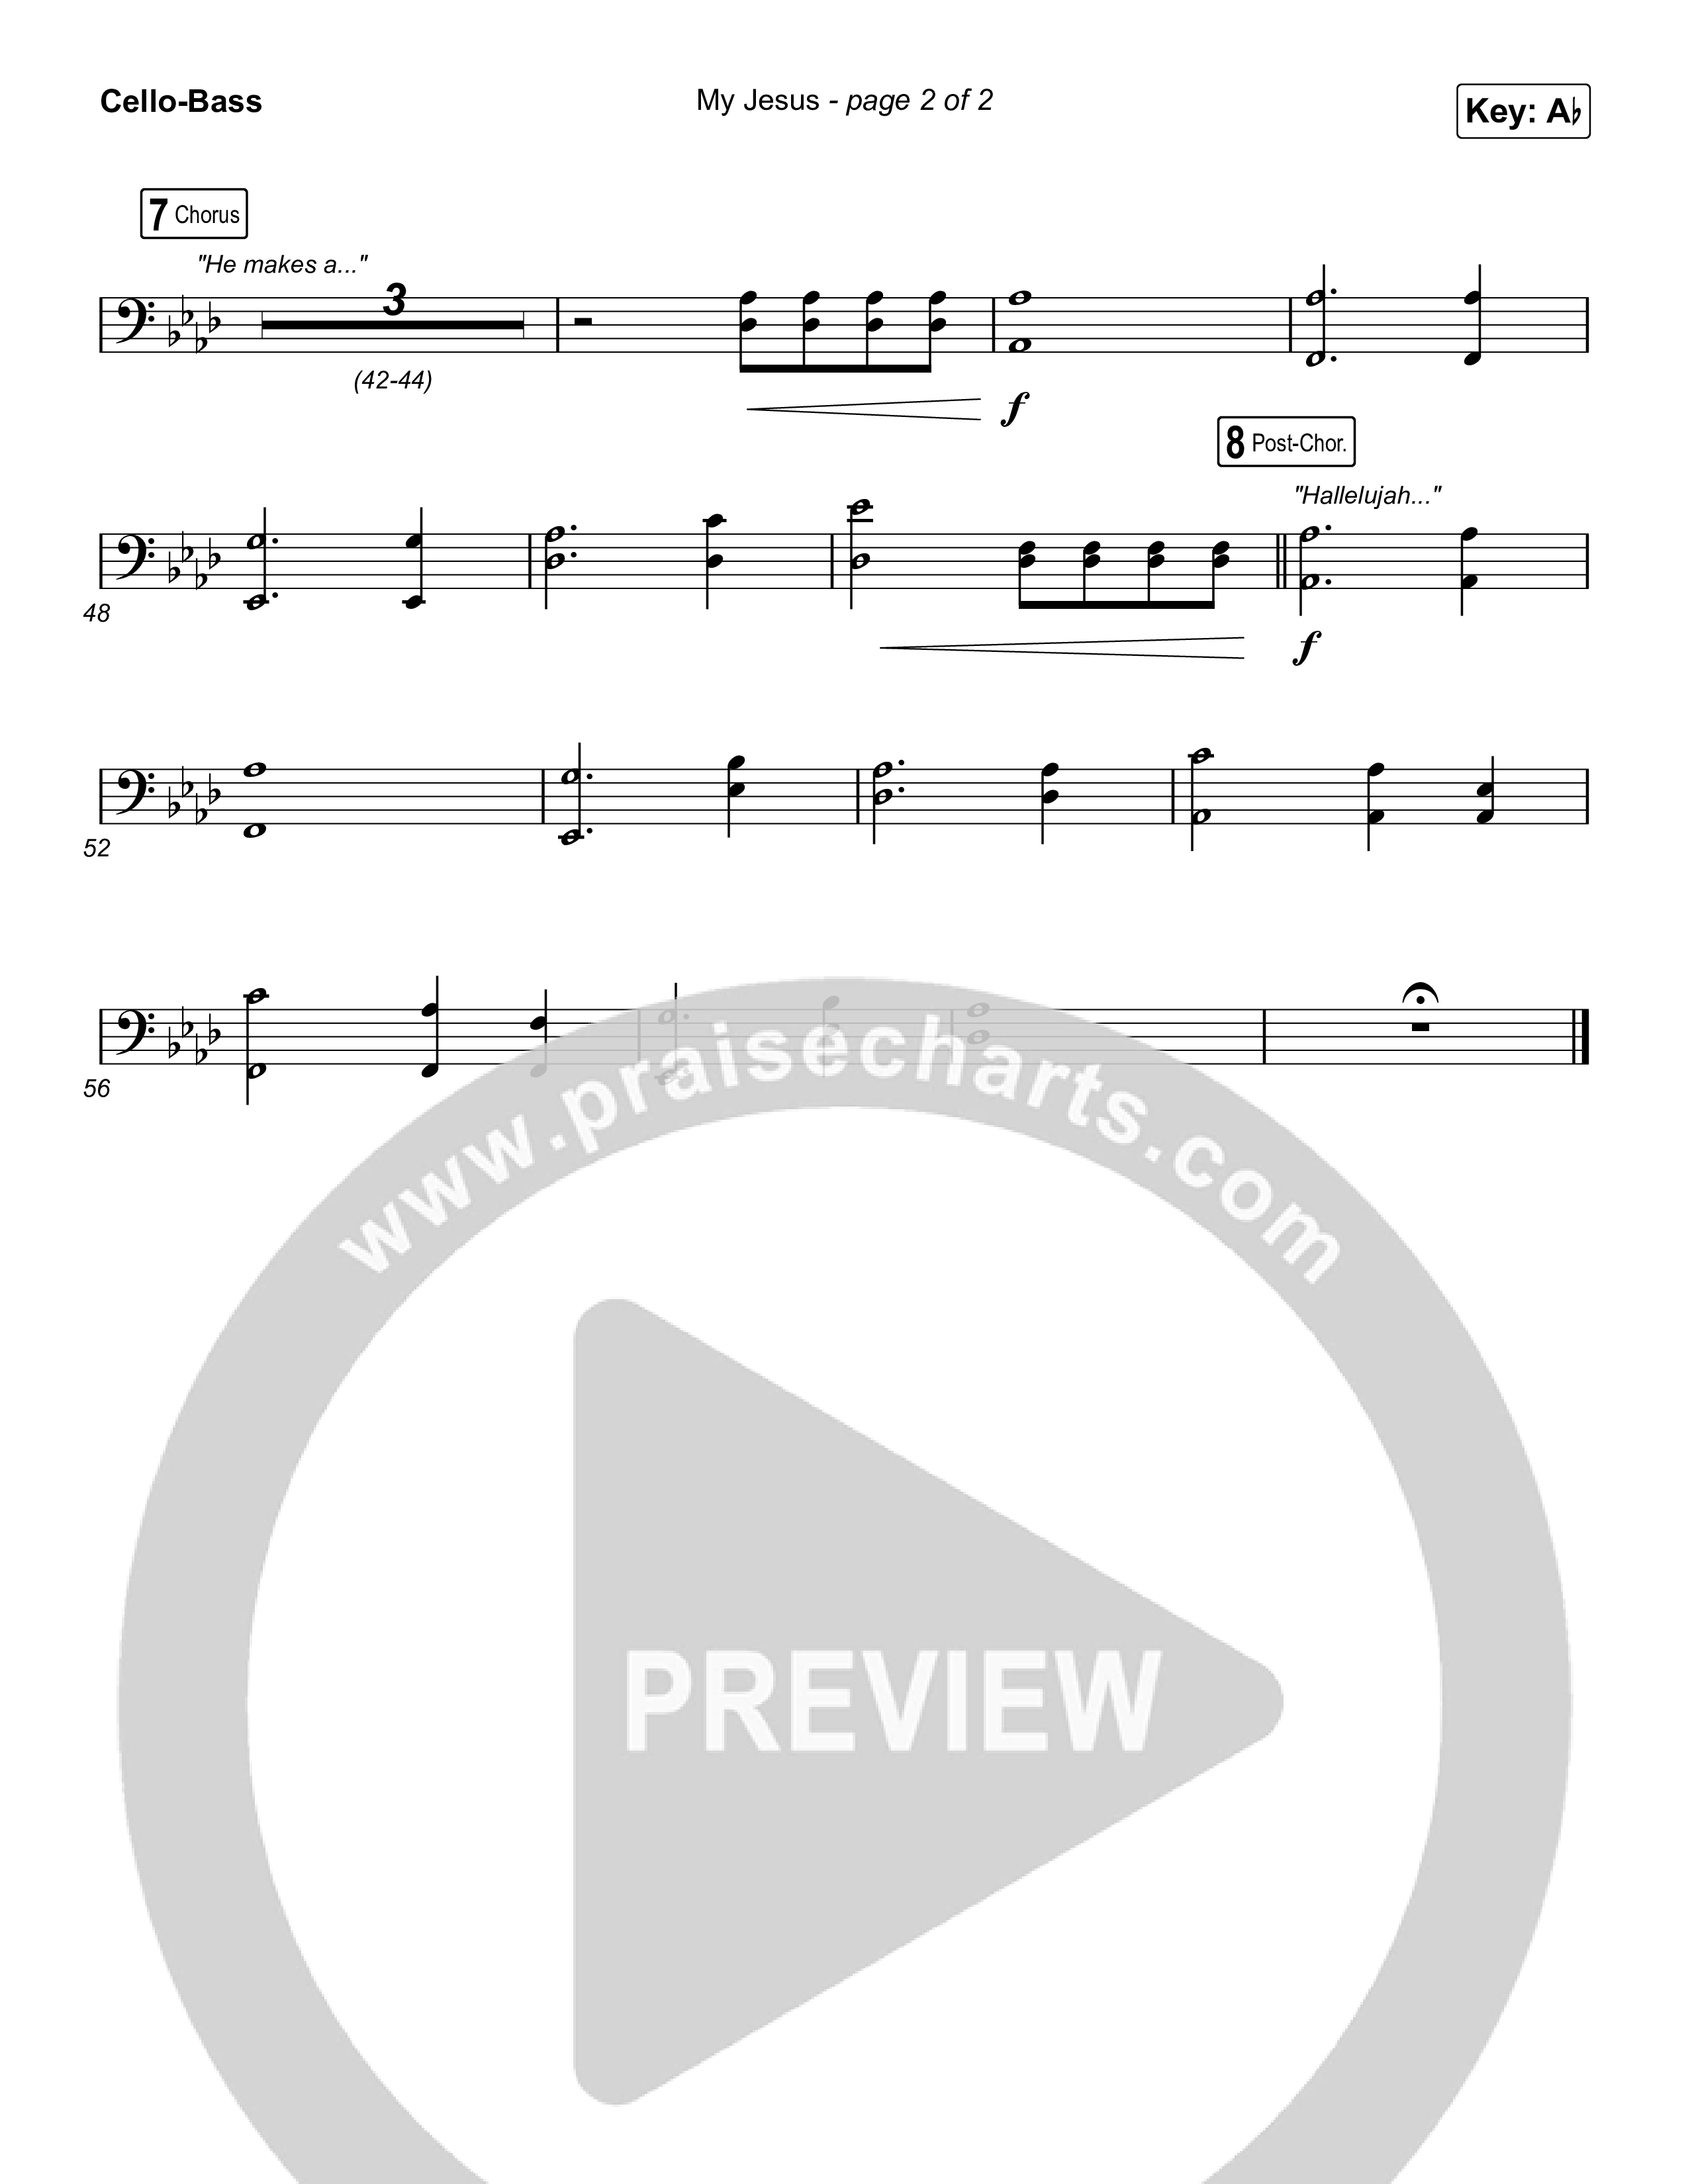 My Jesus (Worship Choir SAB) Cello/Bass (Anne Wilson / Arr. Luke Gambill)